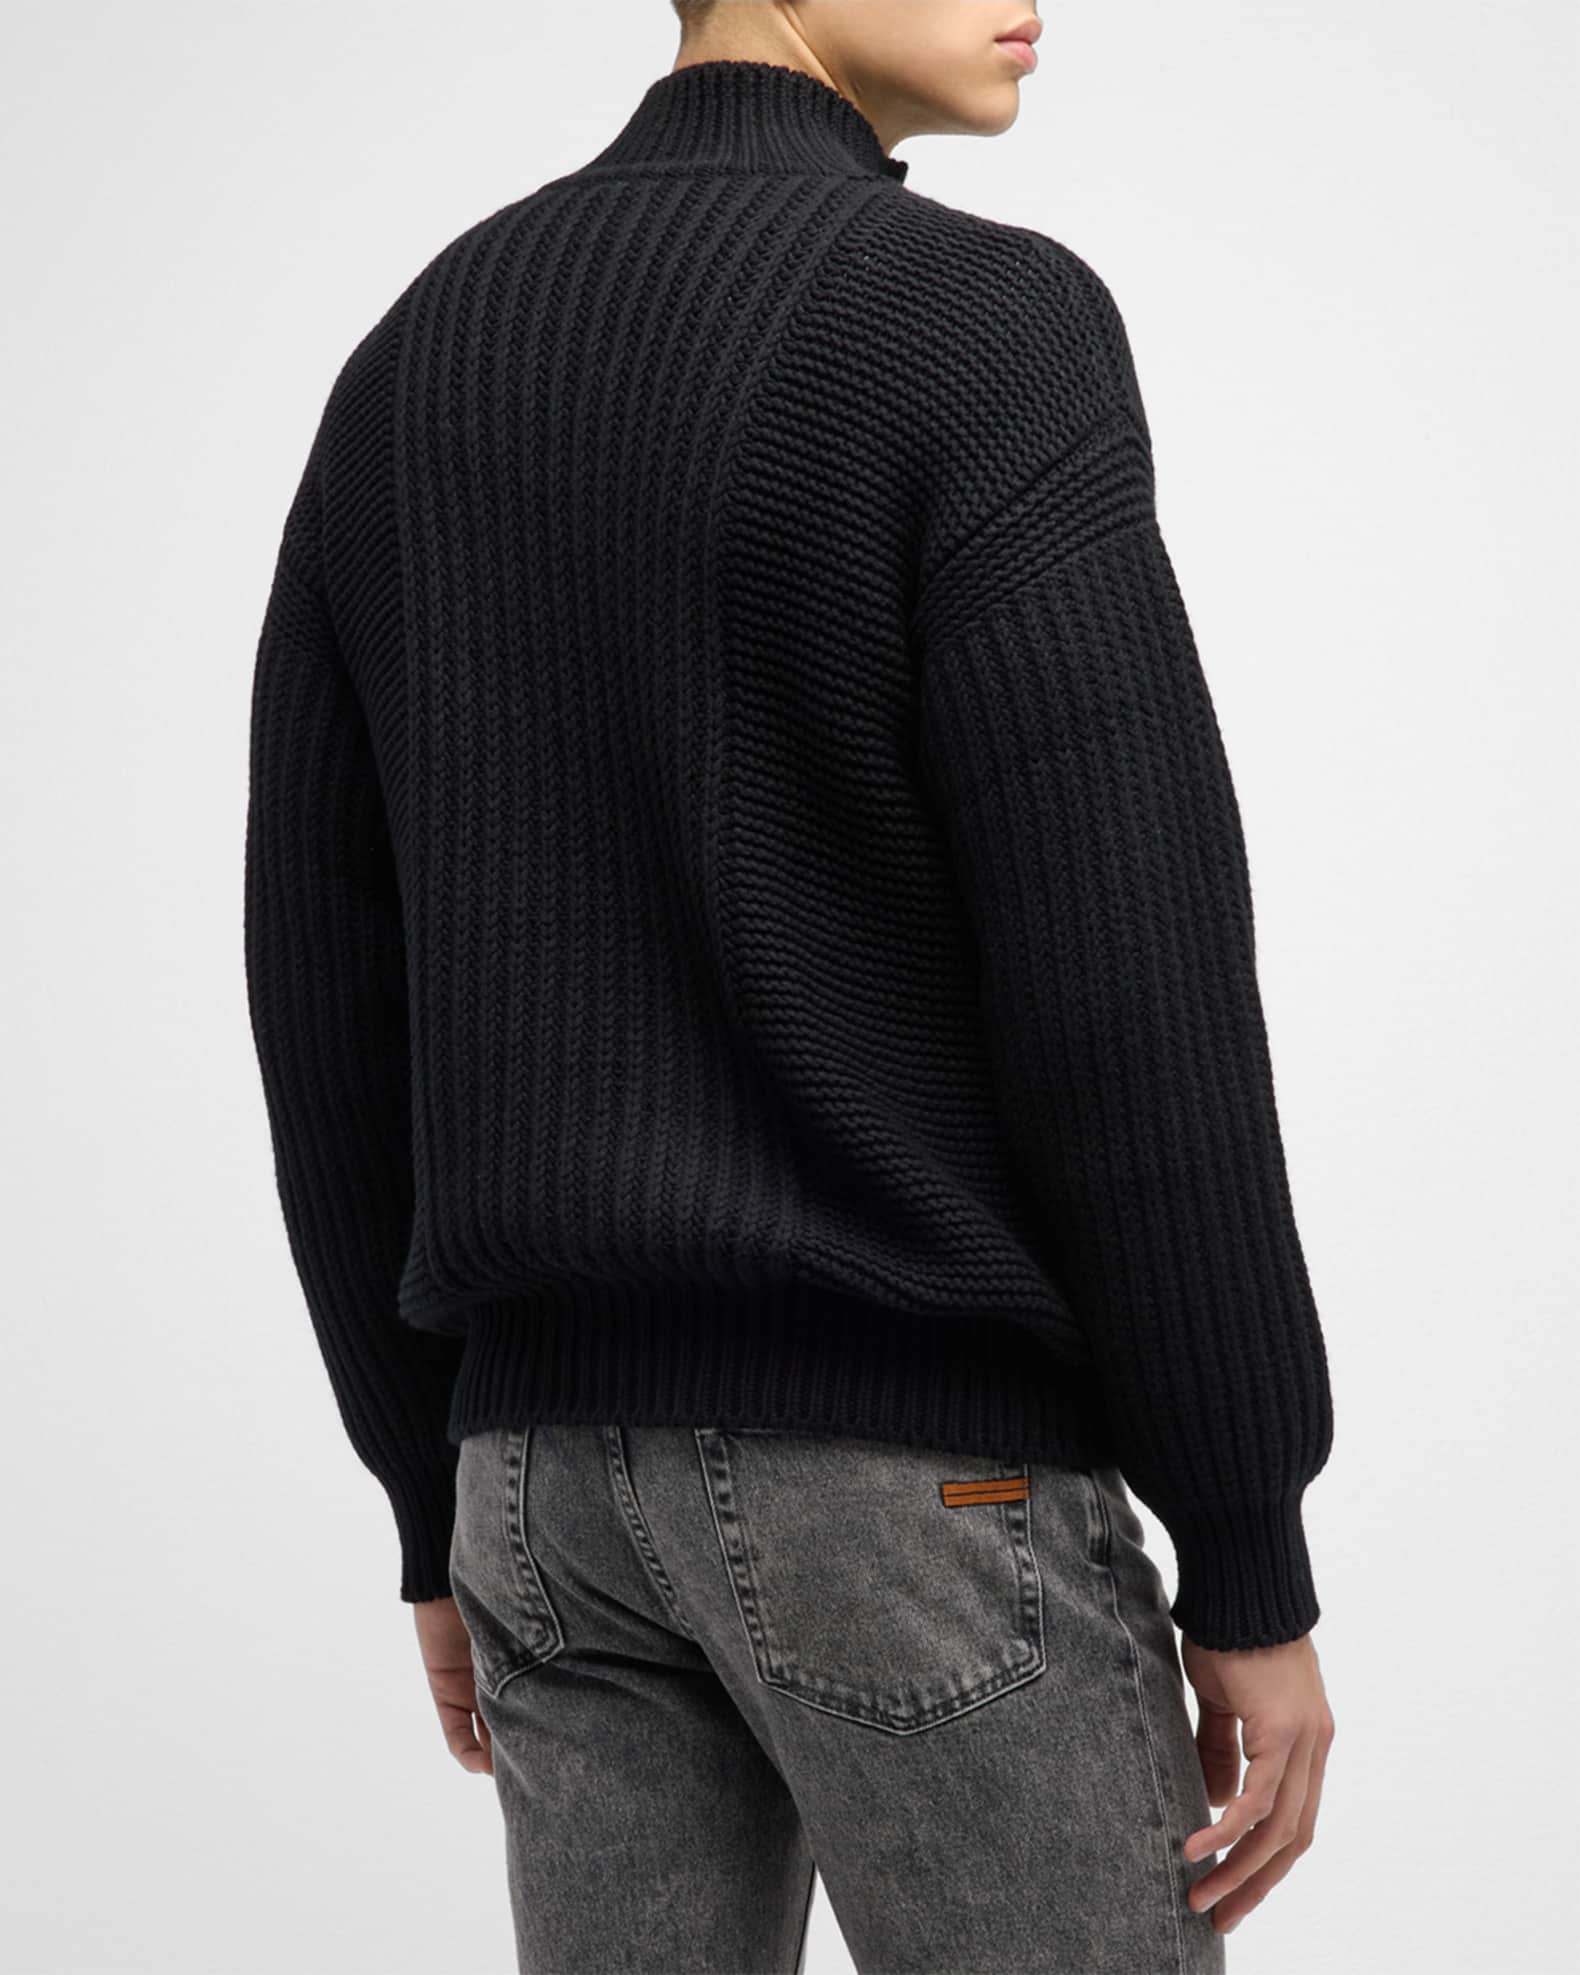 ZEGNA Men's Cashmere Knit Turtleneck Sweater | Neiman Marcus